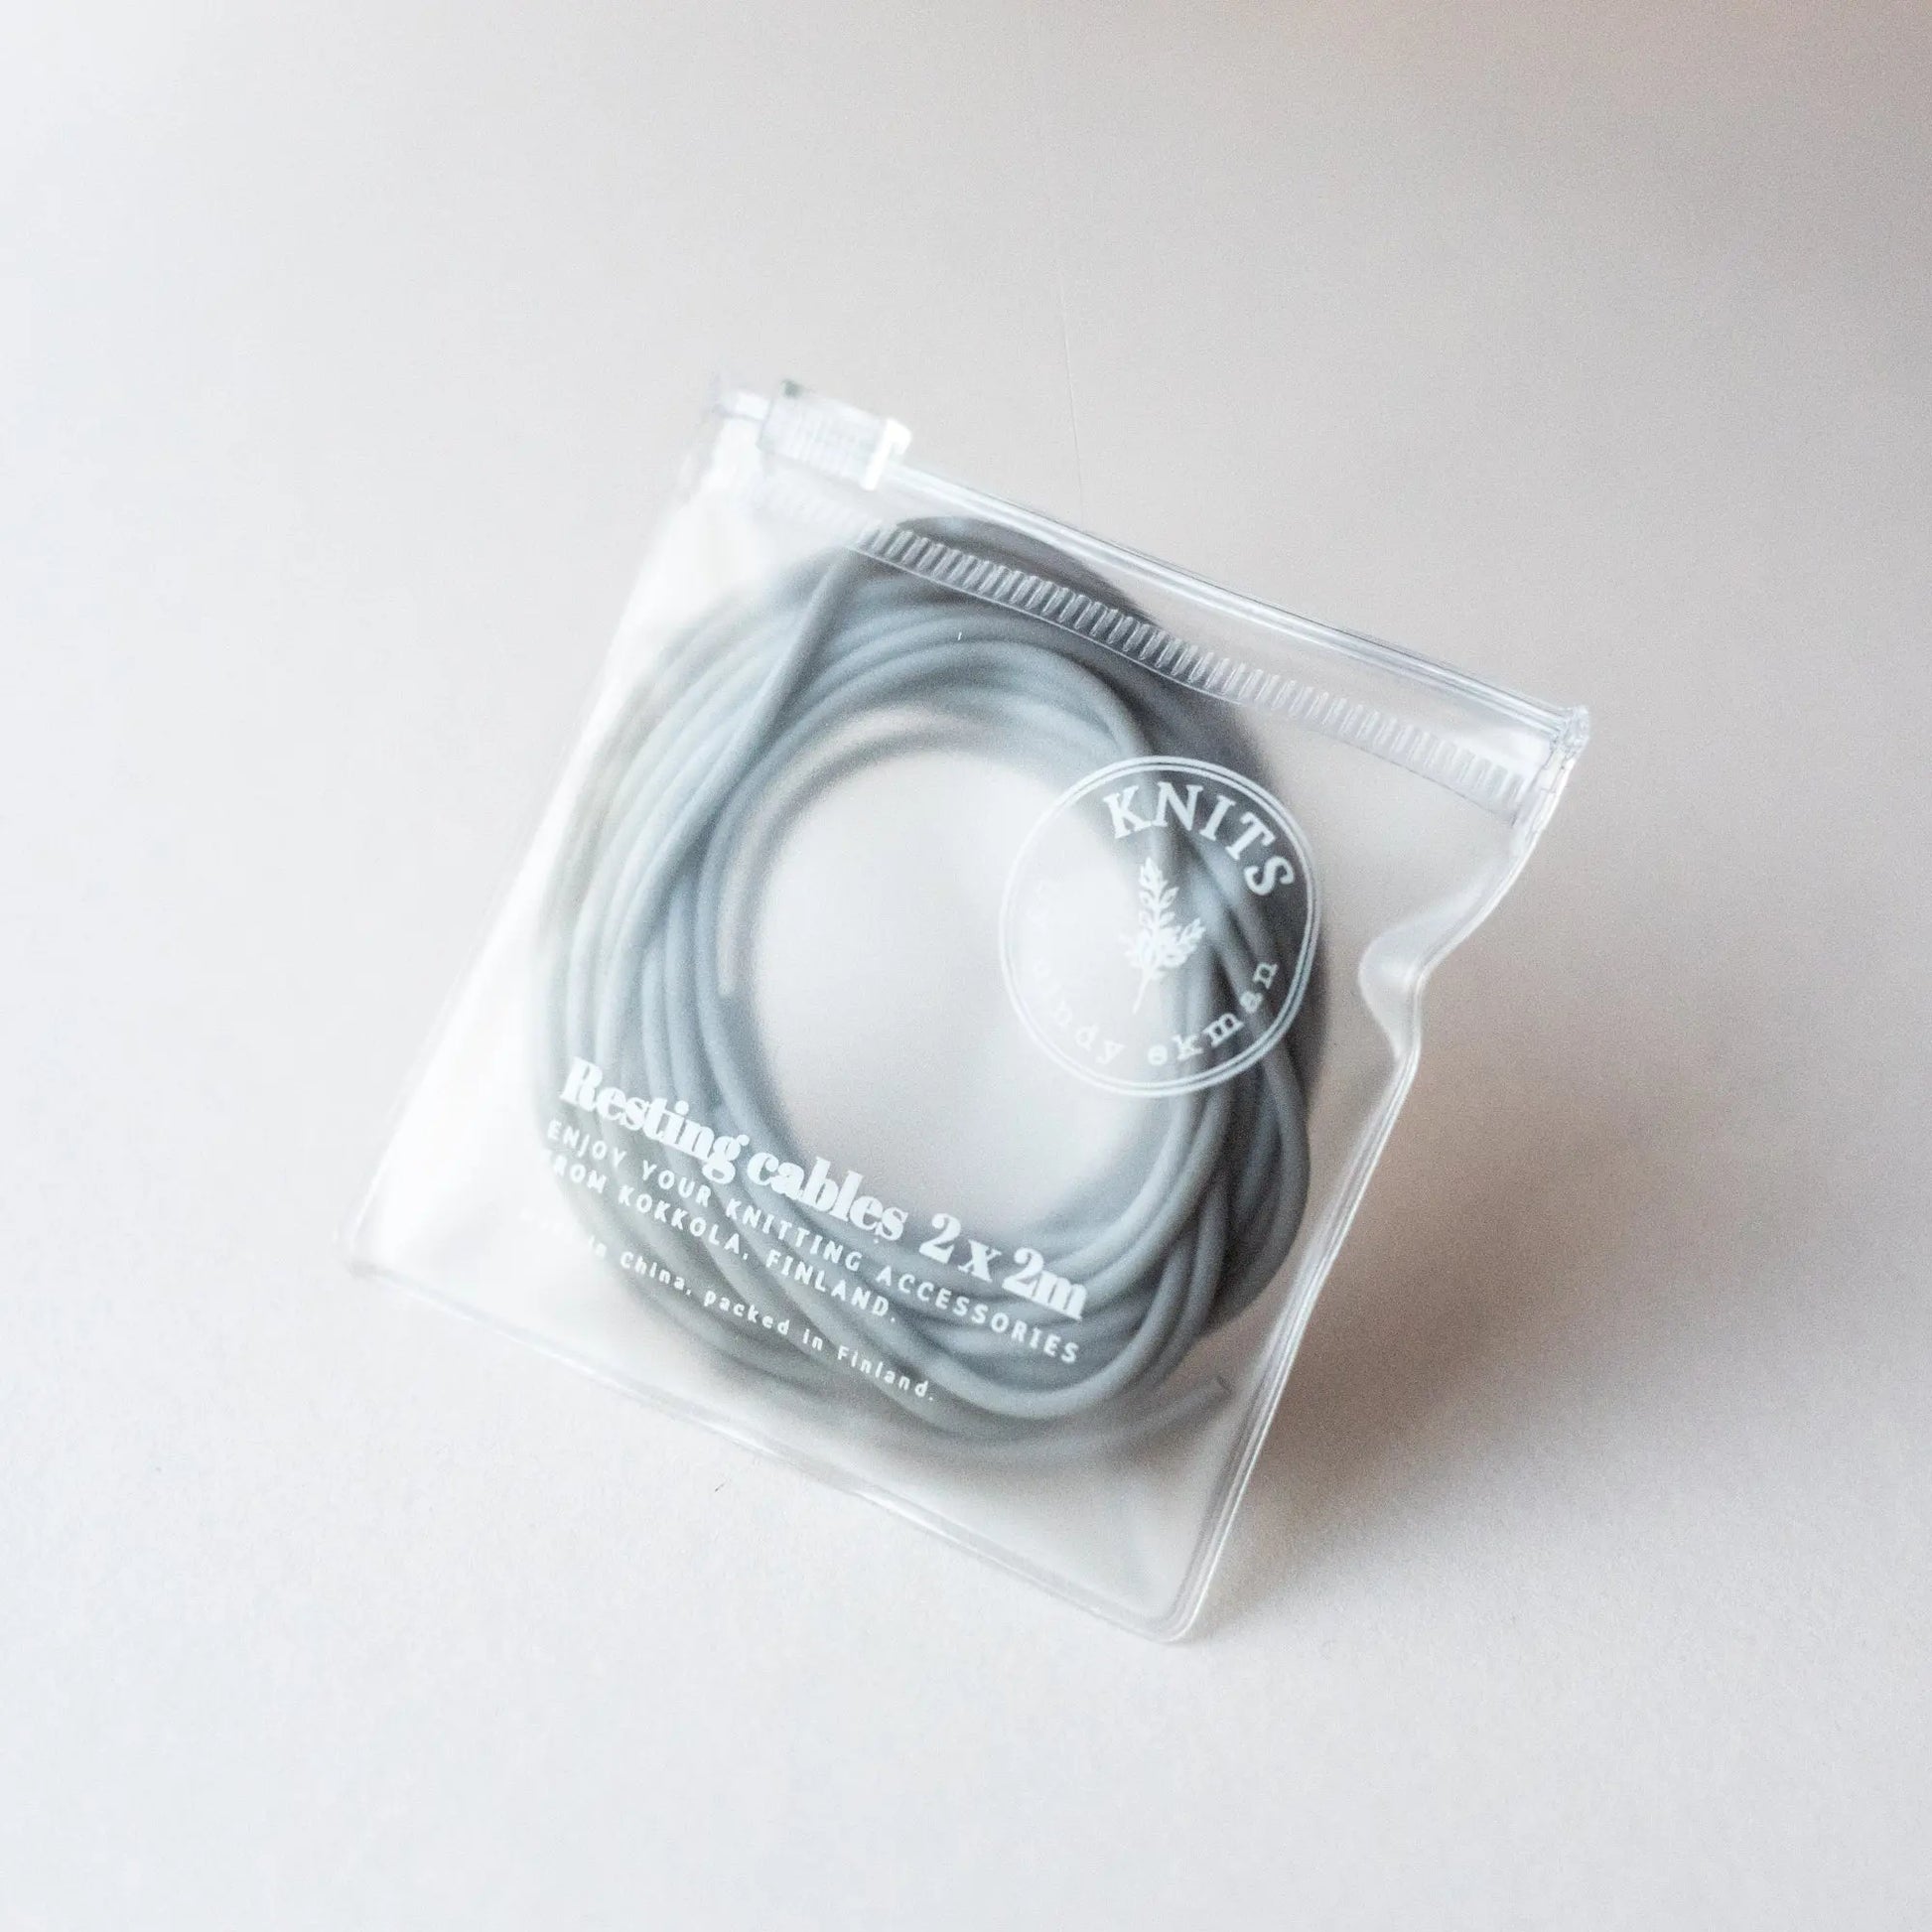 testing cables in ziplock bags